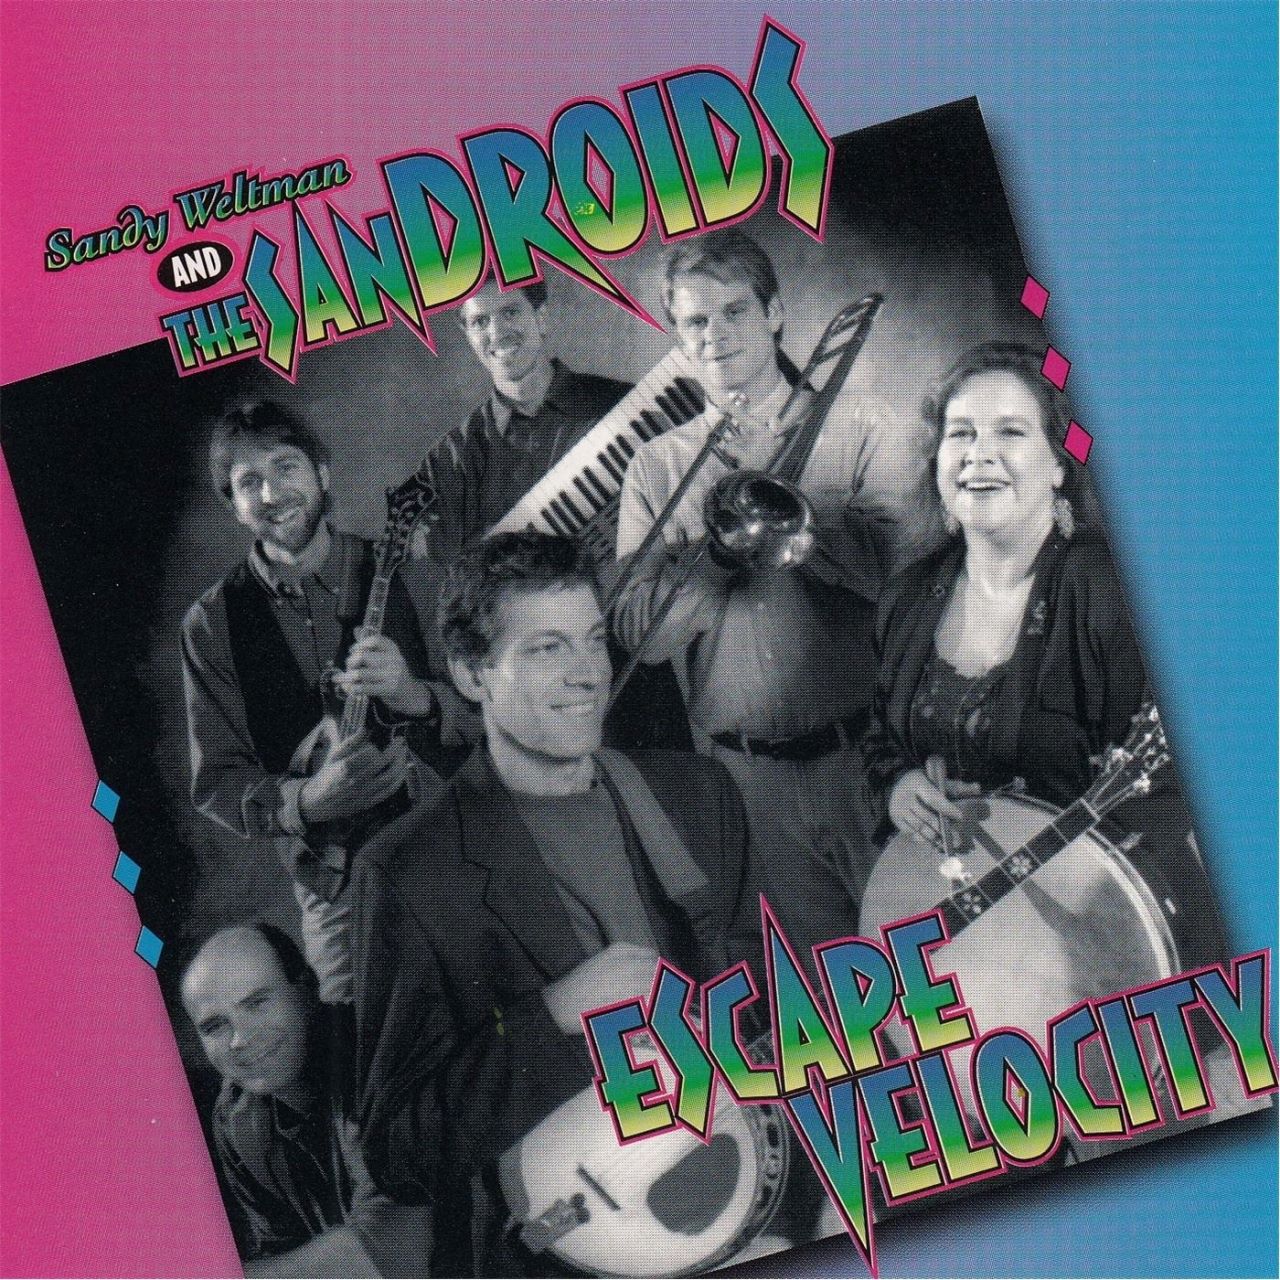 Sandy Weltman And The Sandroids - Escape Velocity cover album